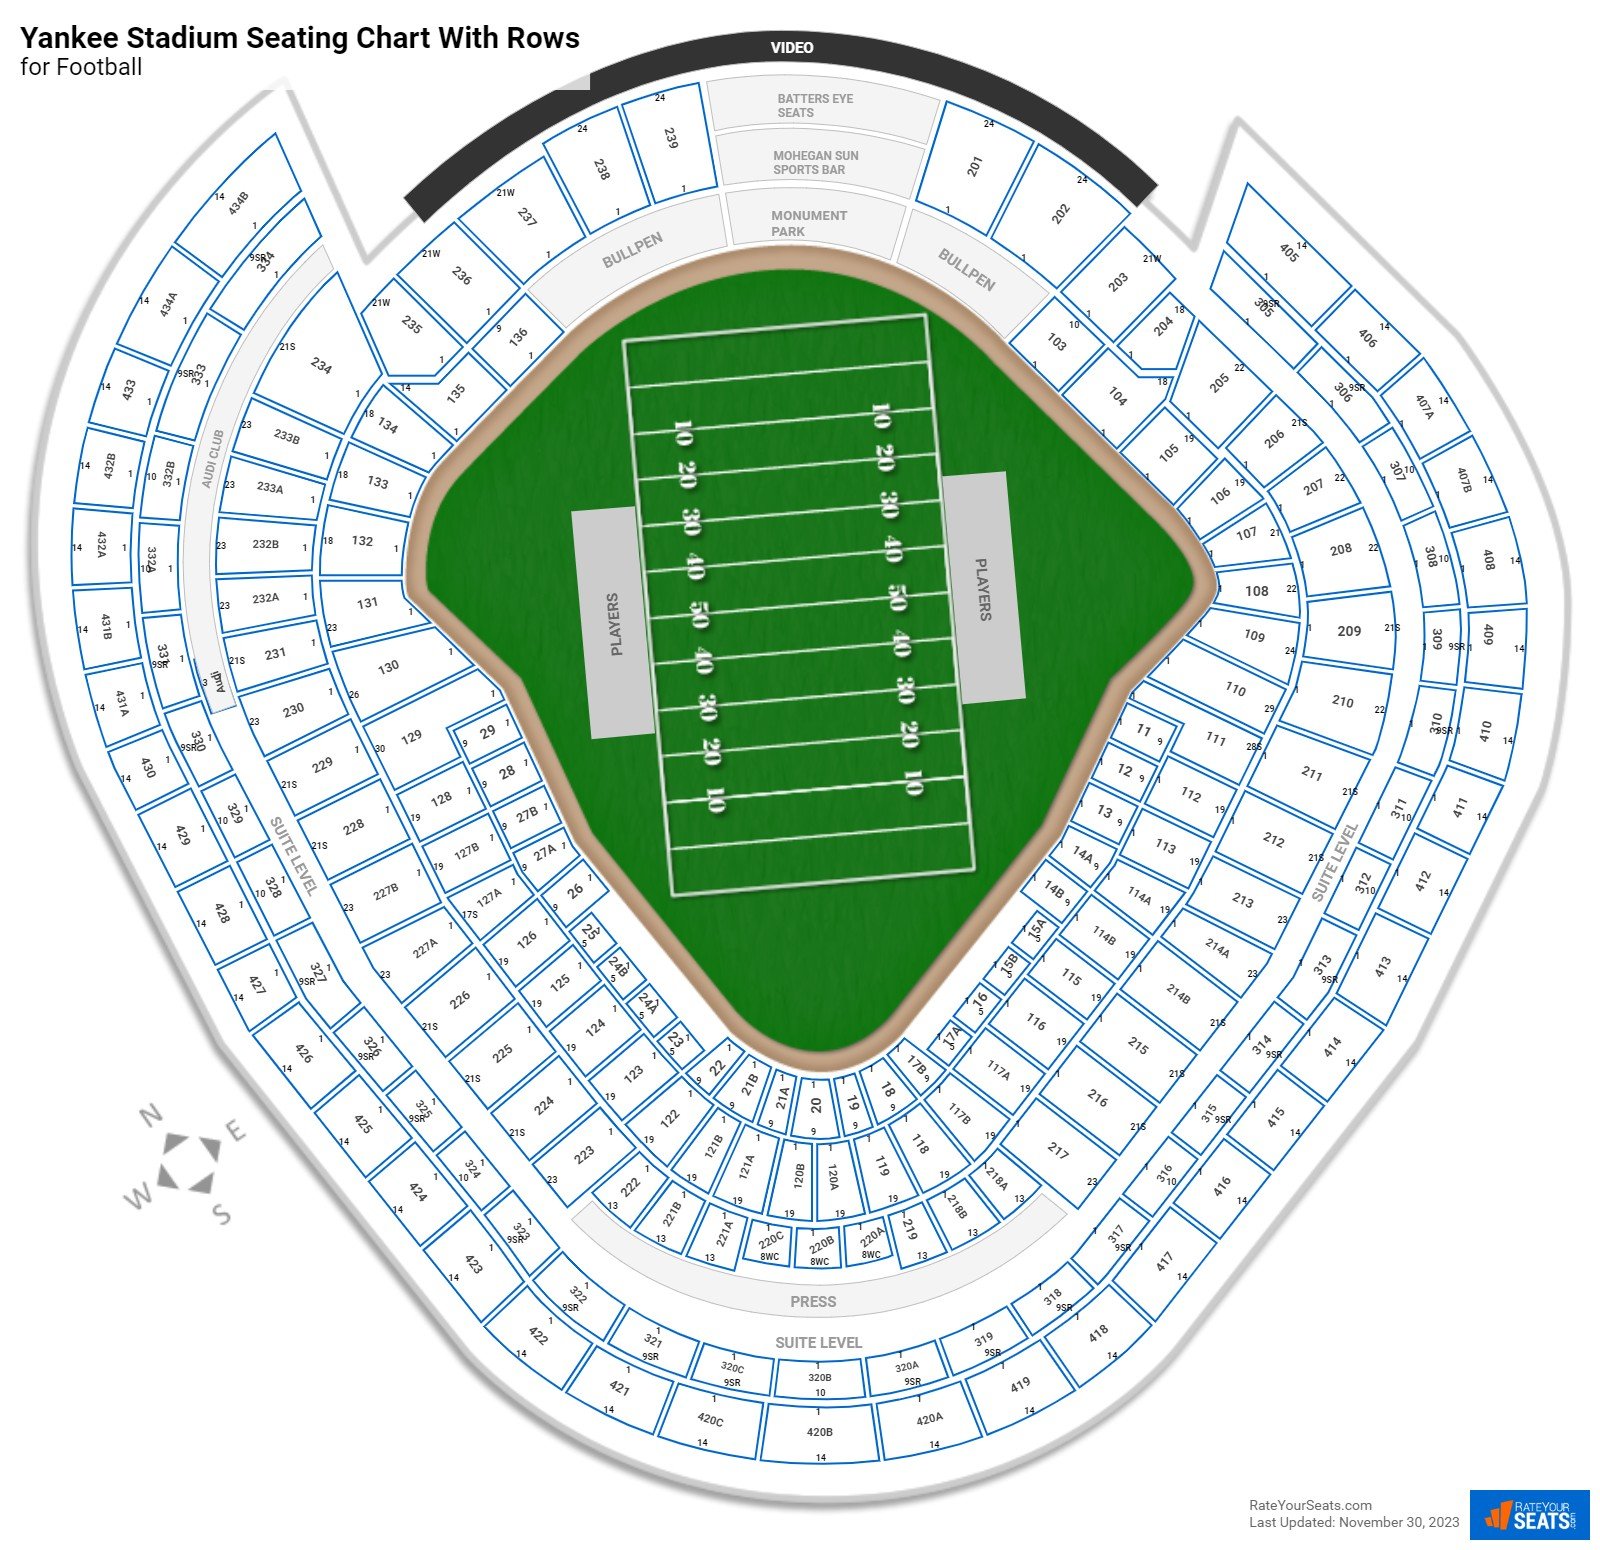 Yankee Stadium Seating Charts for Football - RateYourSeats.com